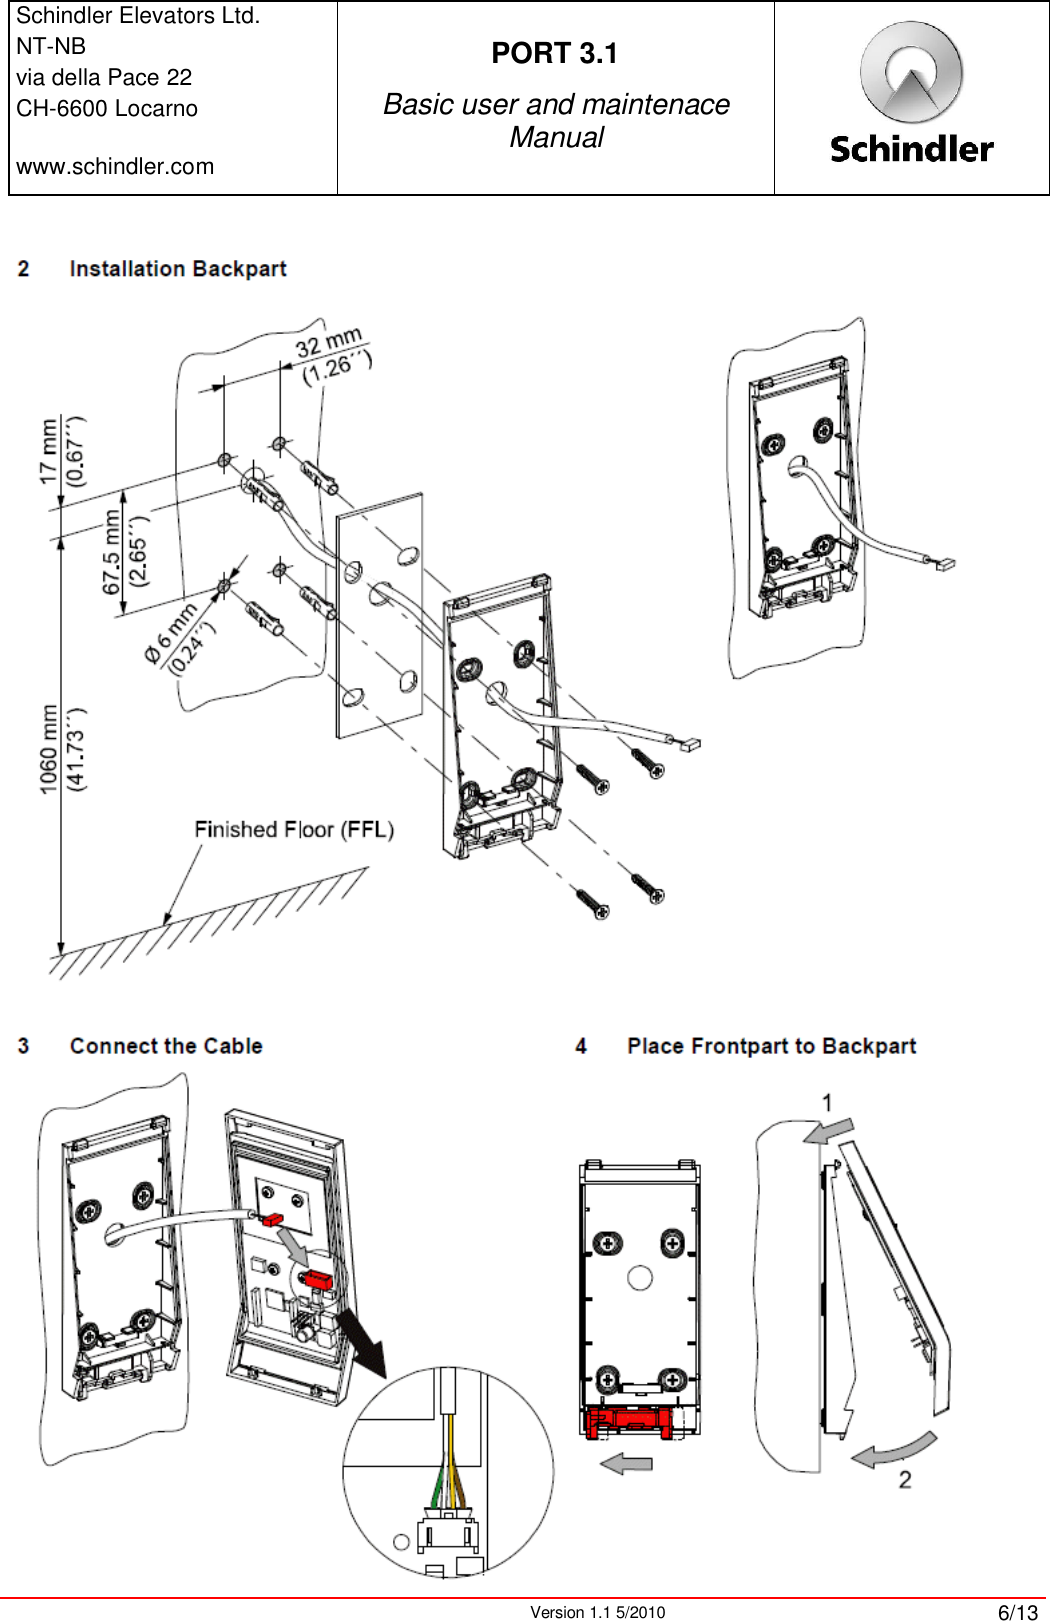 Schindler Elevators Ltd.NT-NBvia della Pace 22CH-6600 Locarnowww.schindler.comPORT 3.1Basic user and maintenace ManualVersion 1.1 5/2010 6/13